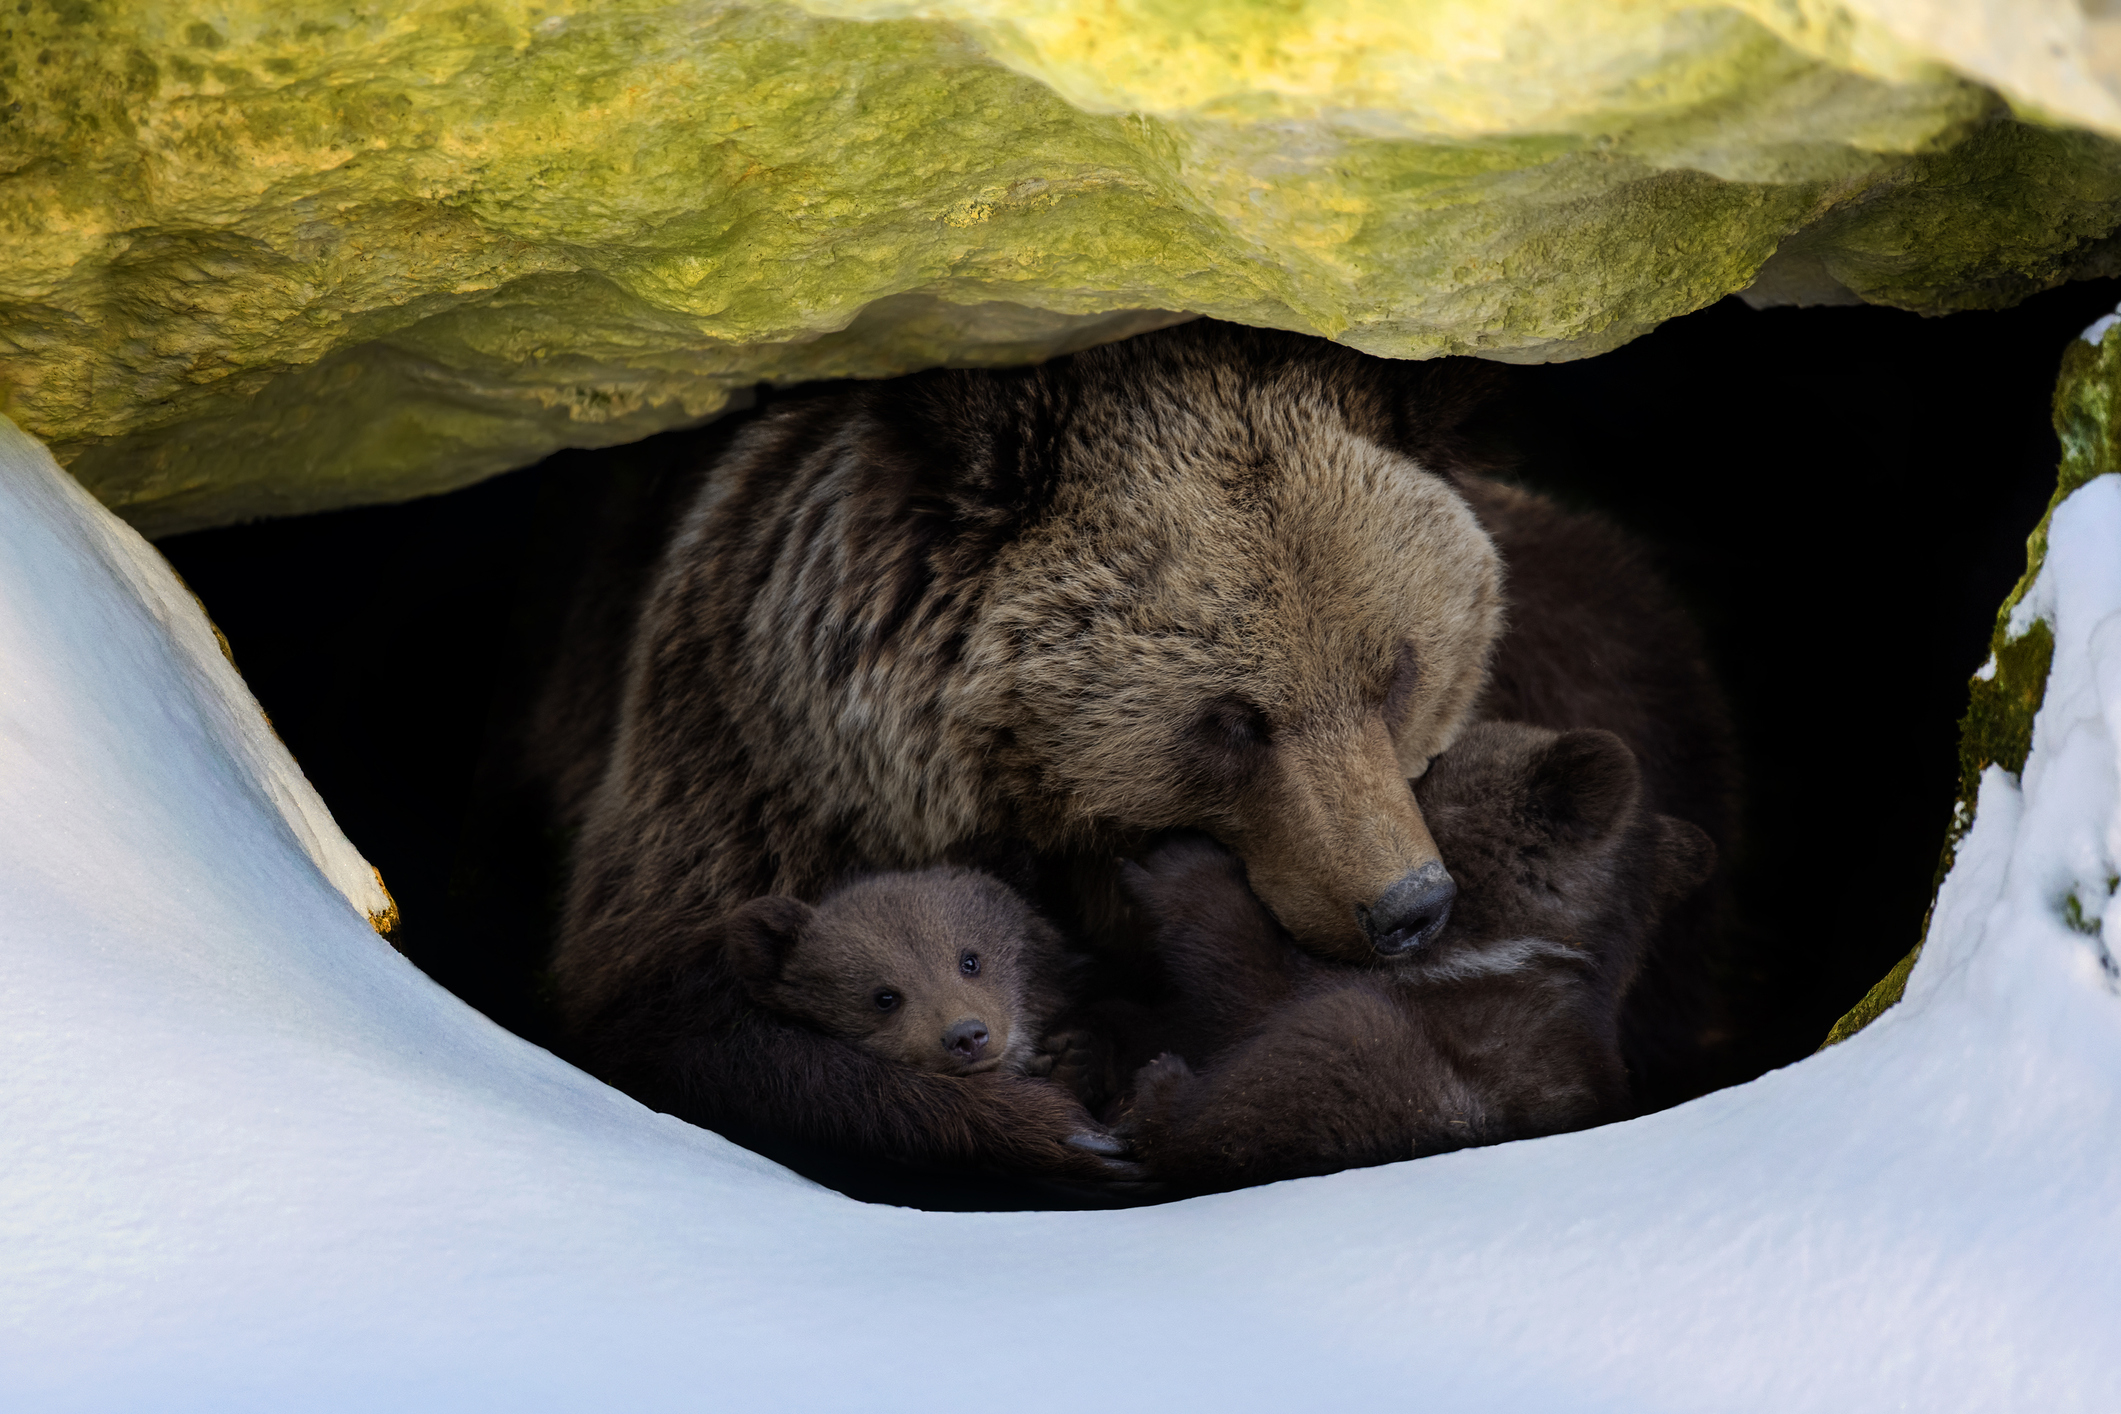 Bear hibernation: More than a winter's nap | Ars Technica